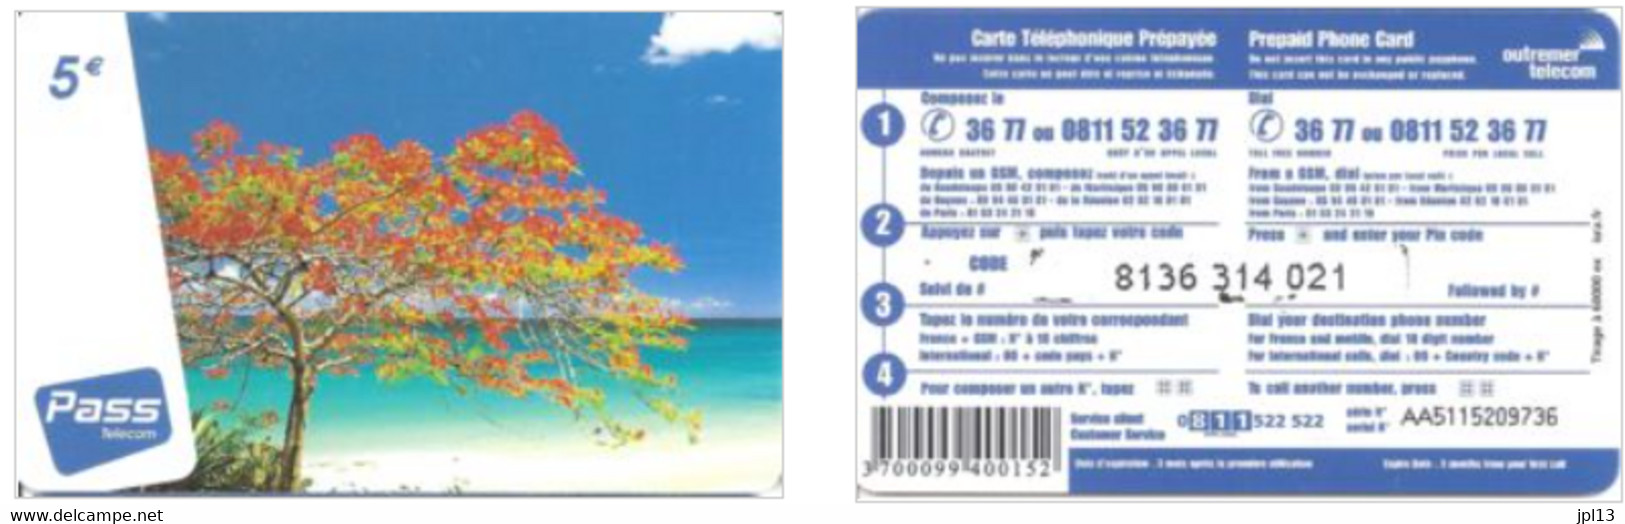 Carte Prépayée Outremer Telecom 5€ Flamboyant (Pass Telecom), Tirage 60.000 Ex., Série AA5115xxxxxx - Antilles (French)